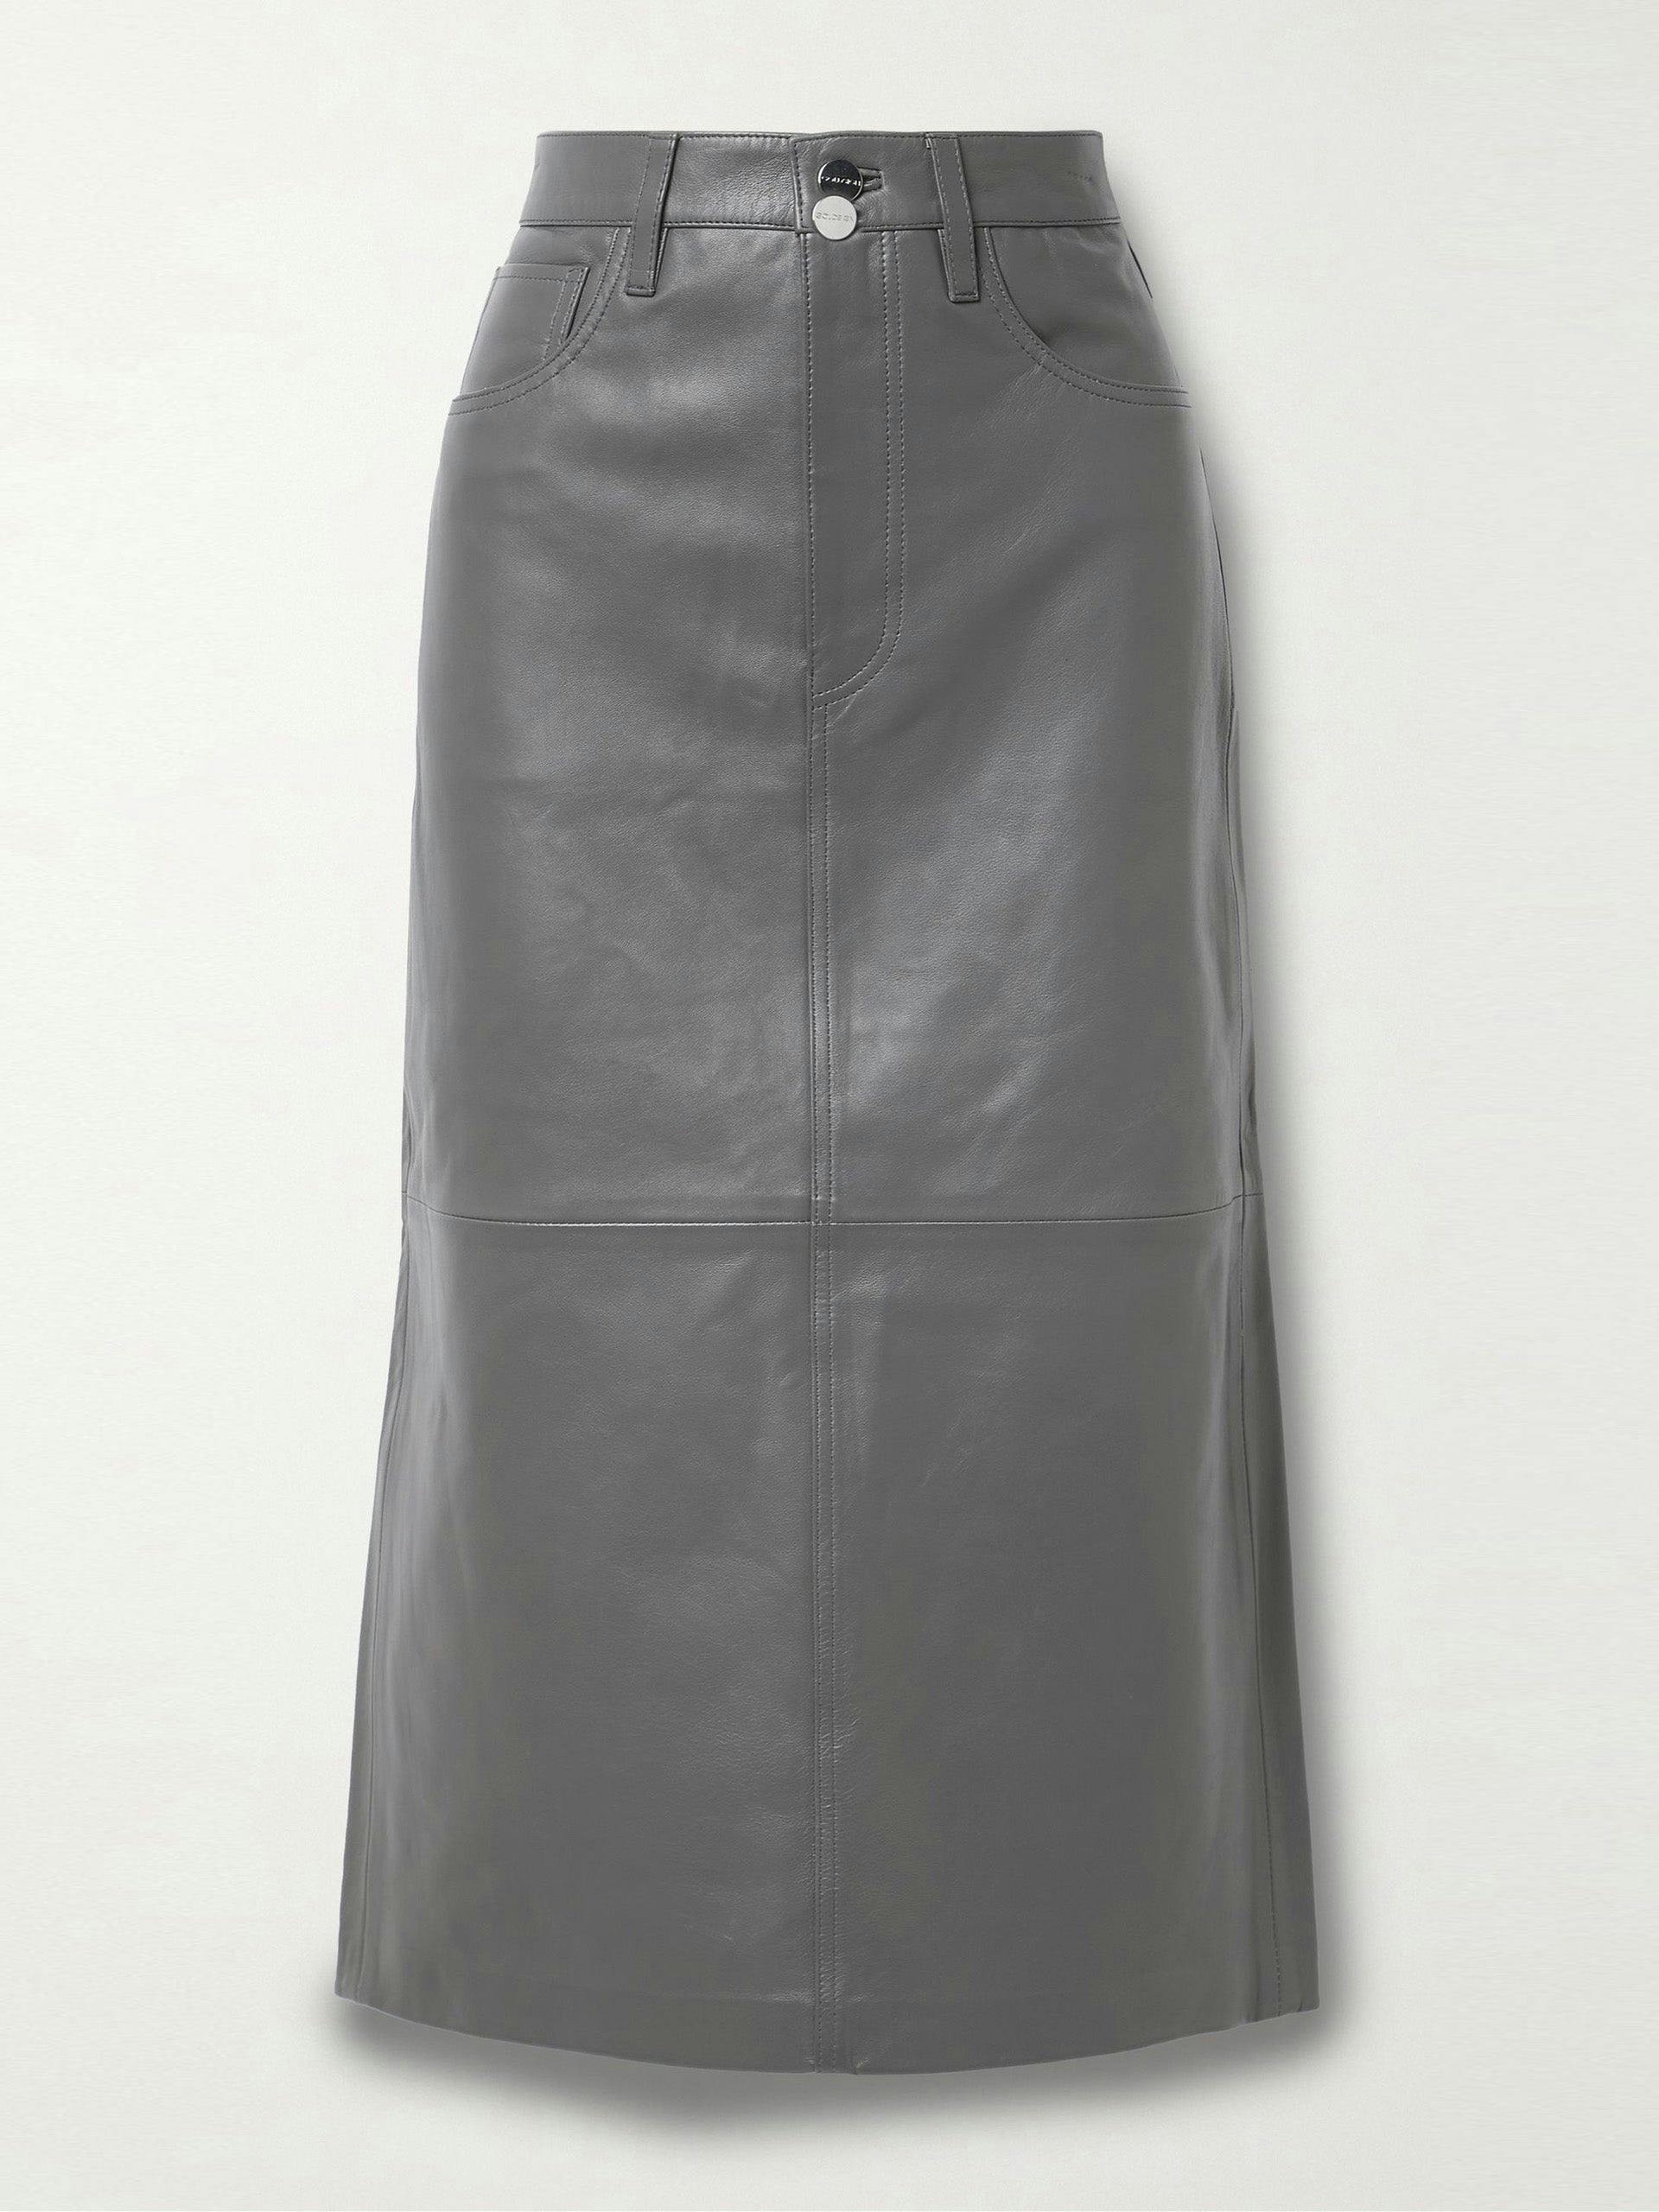 The Low Slung leather midi skirt